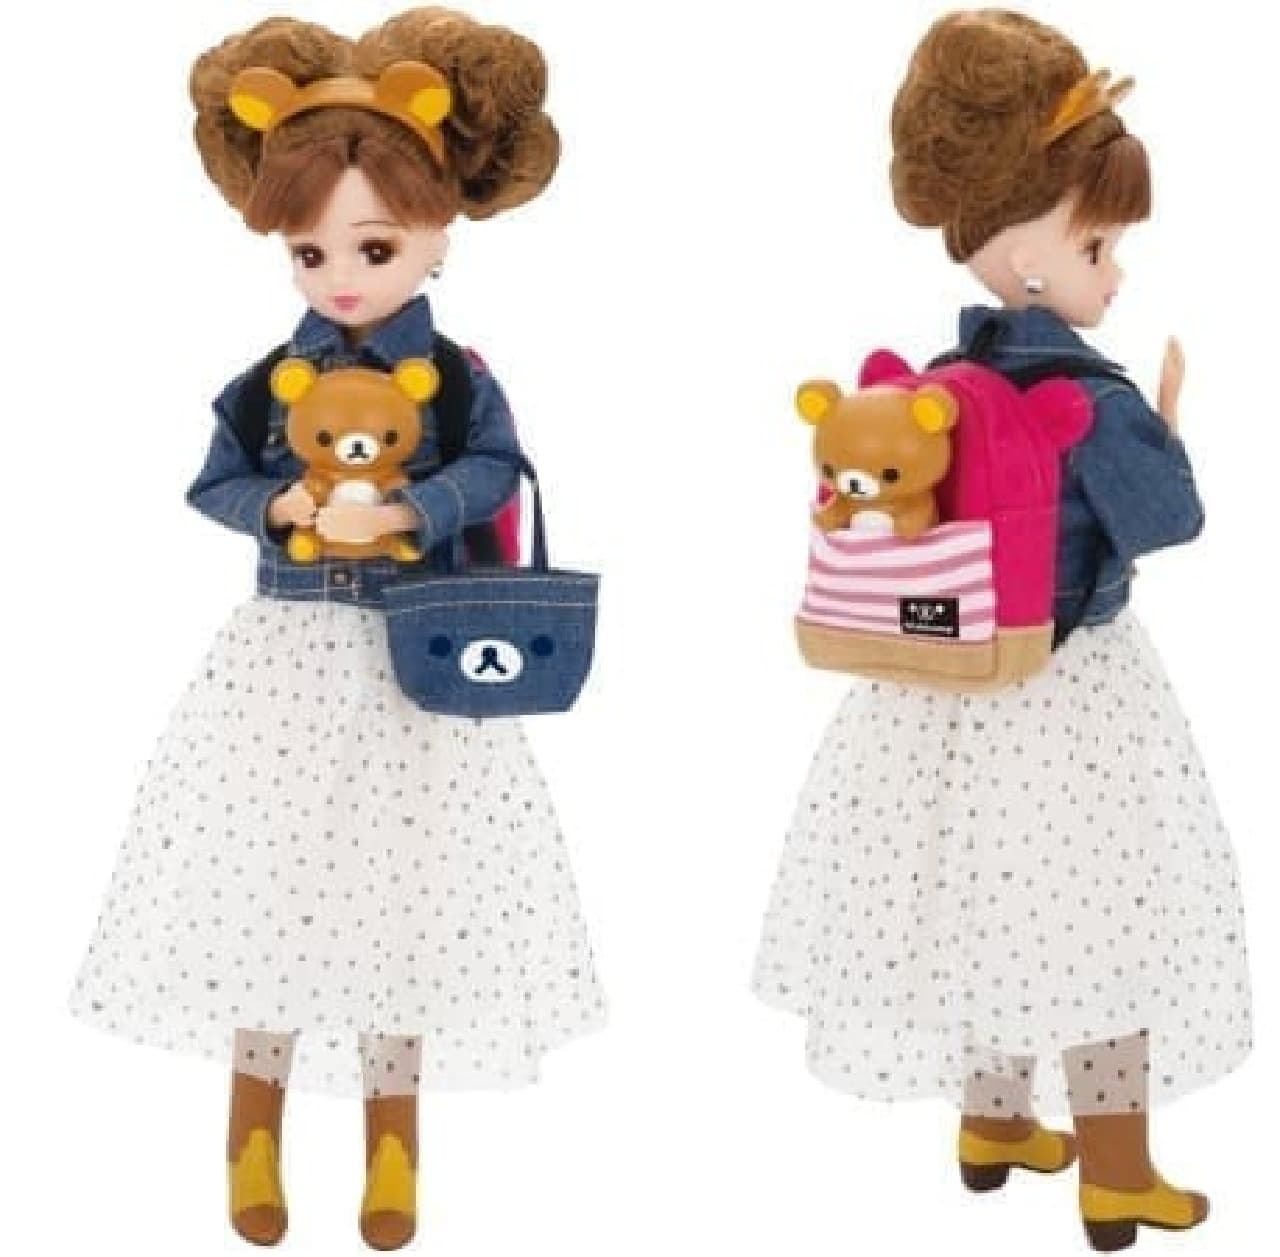 Rilakkuma x Licca-chan collaboration dress-up doll